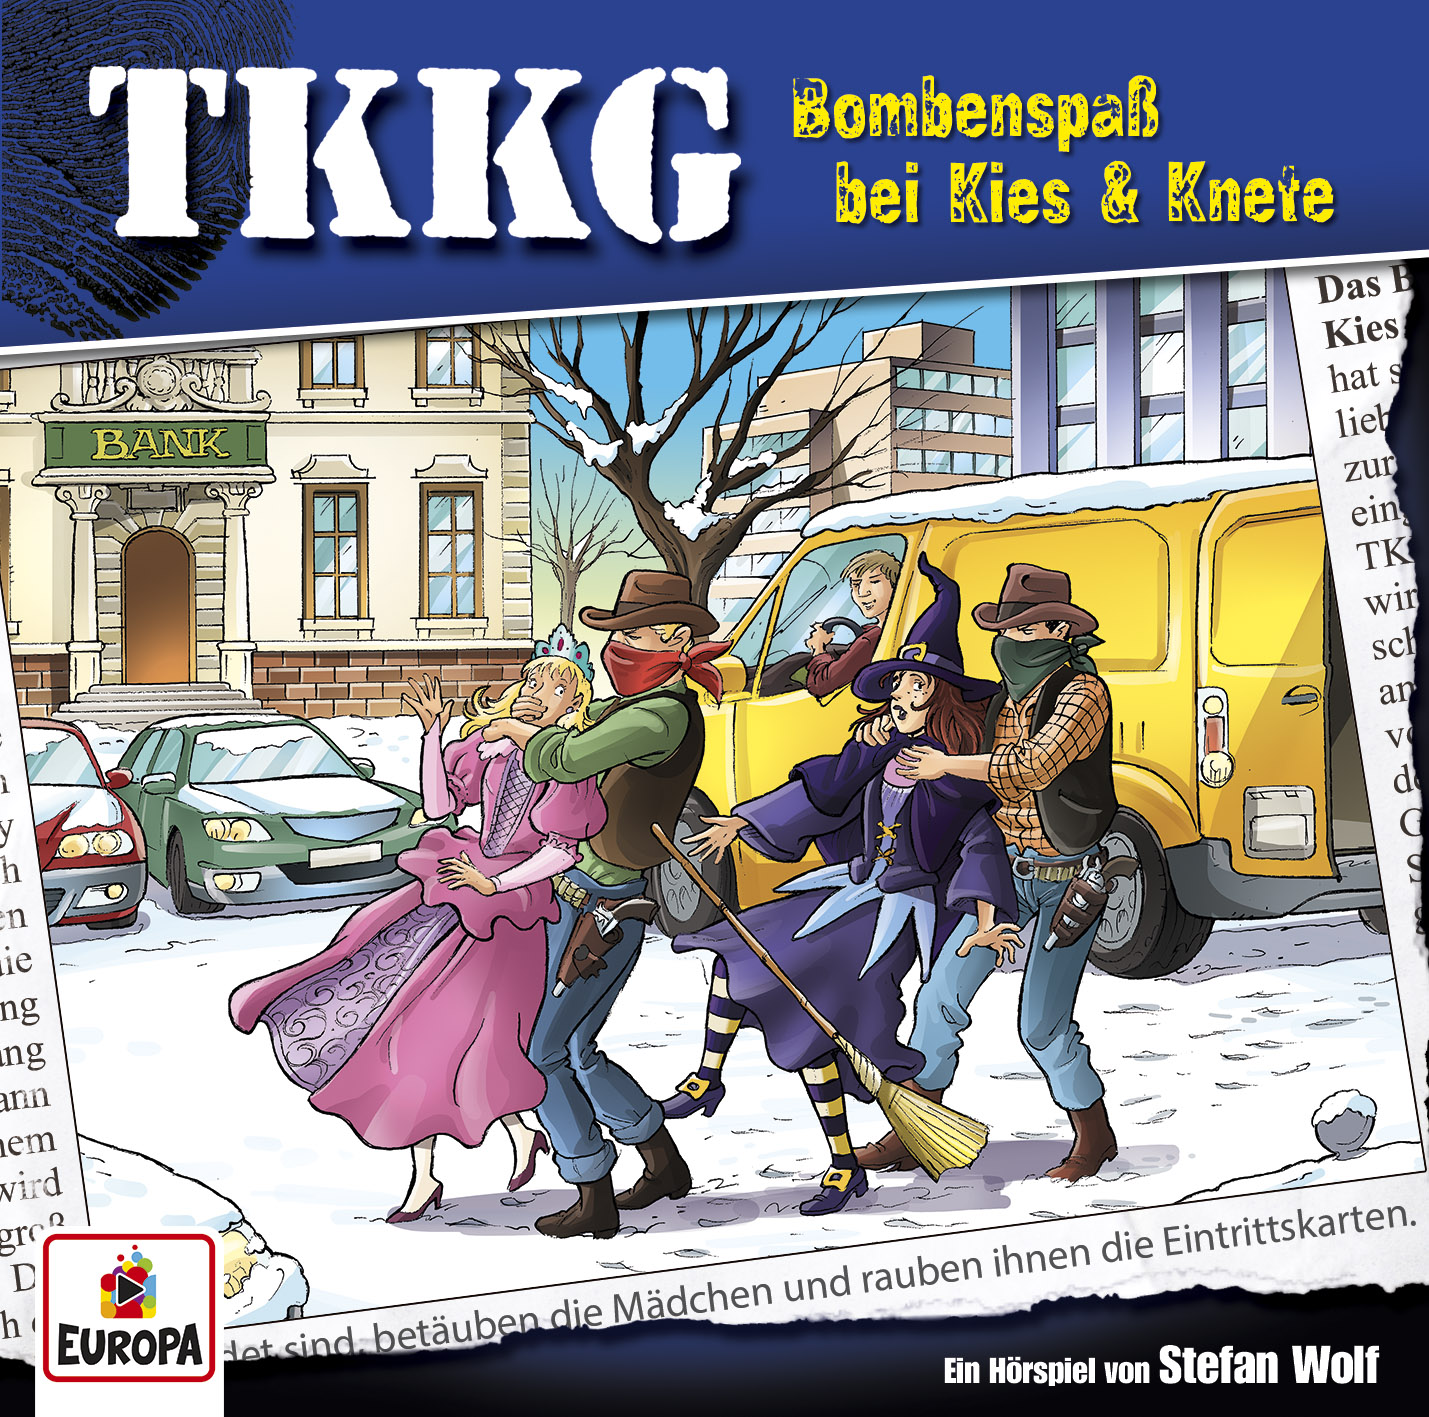 TKKG: Bombenspaß bei Kies & Knete